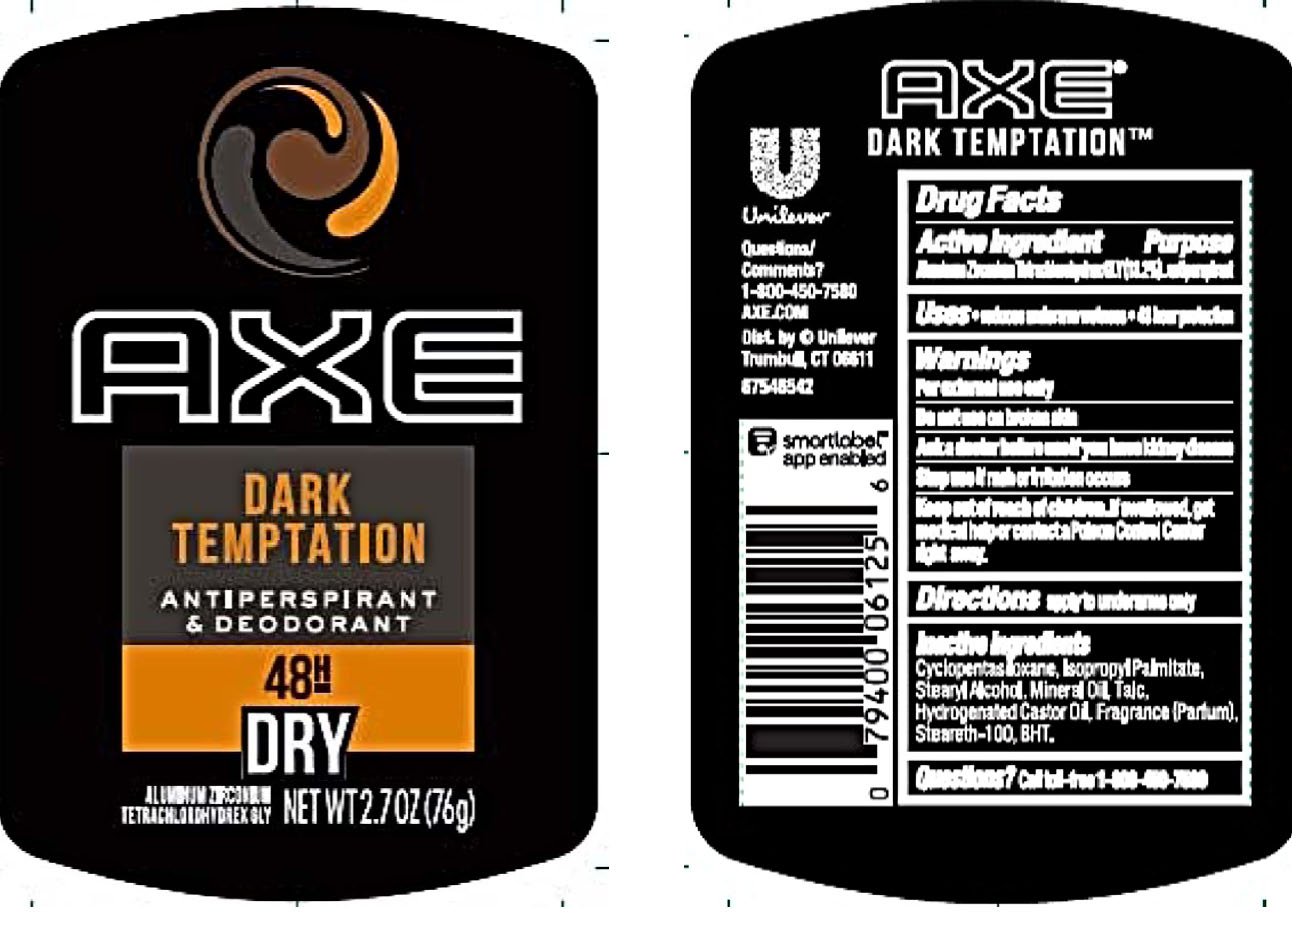 Axe Dark Temptation 48H Dry Antiperspirant and Deodorant